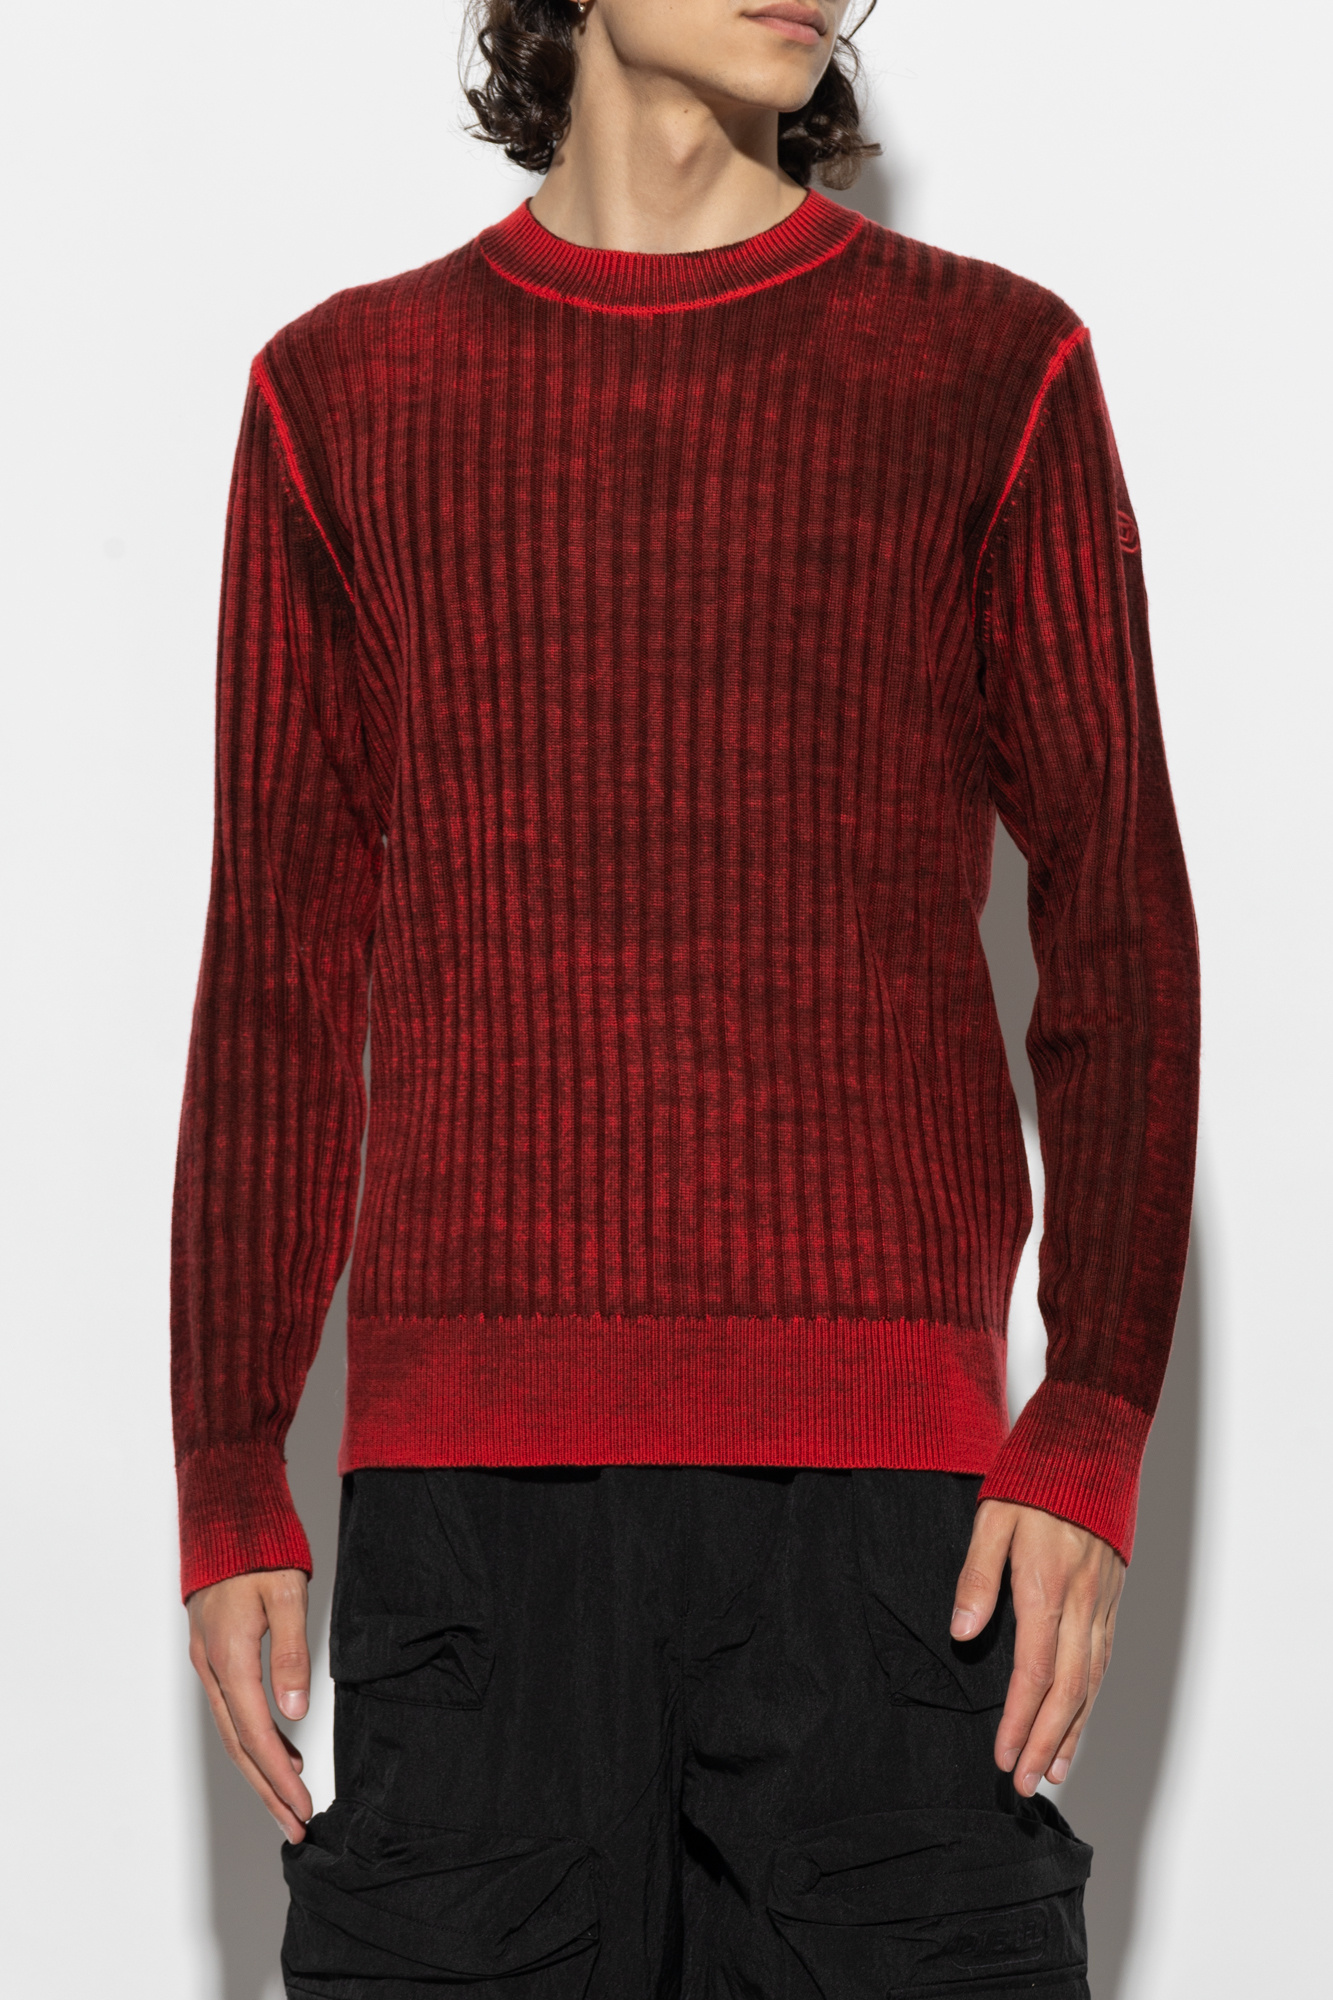 Diesel 'K-ANDELERO' sweater | Men's Clothing | Vitkac